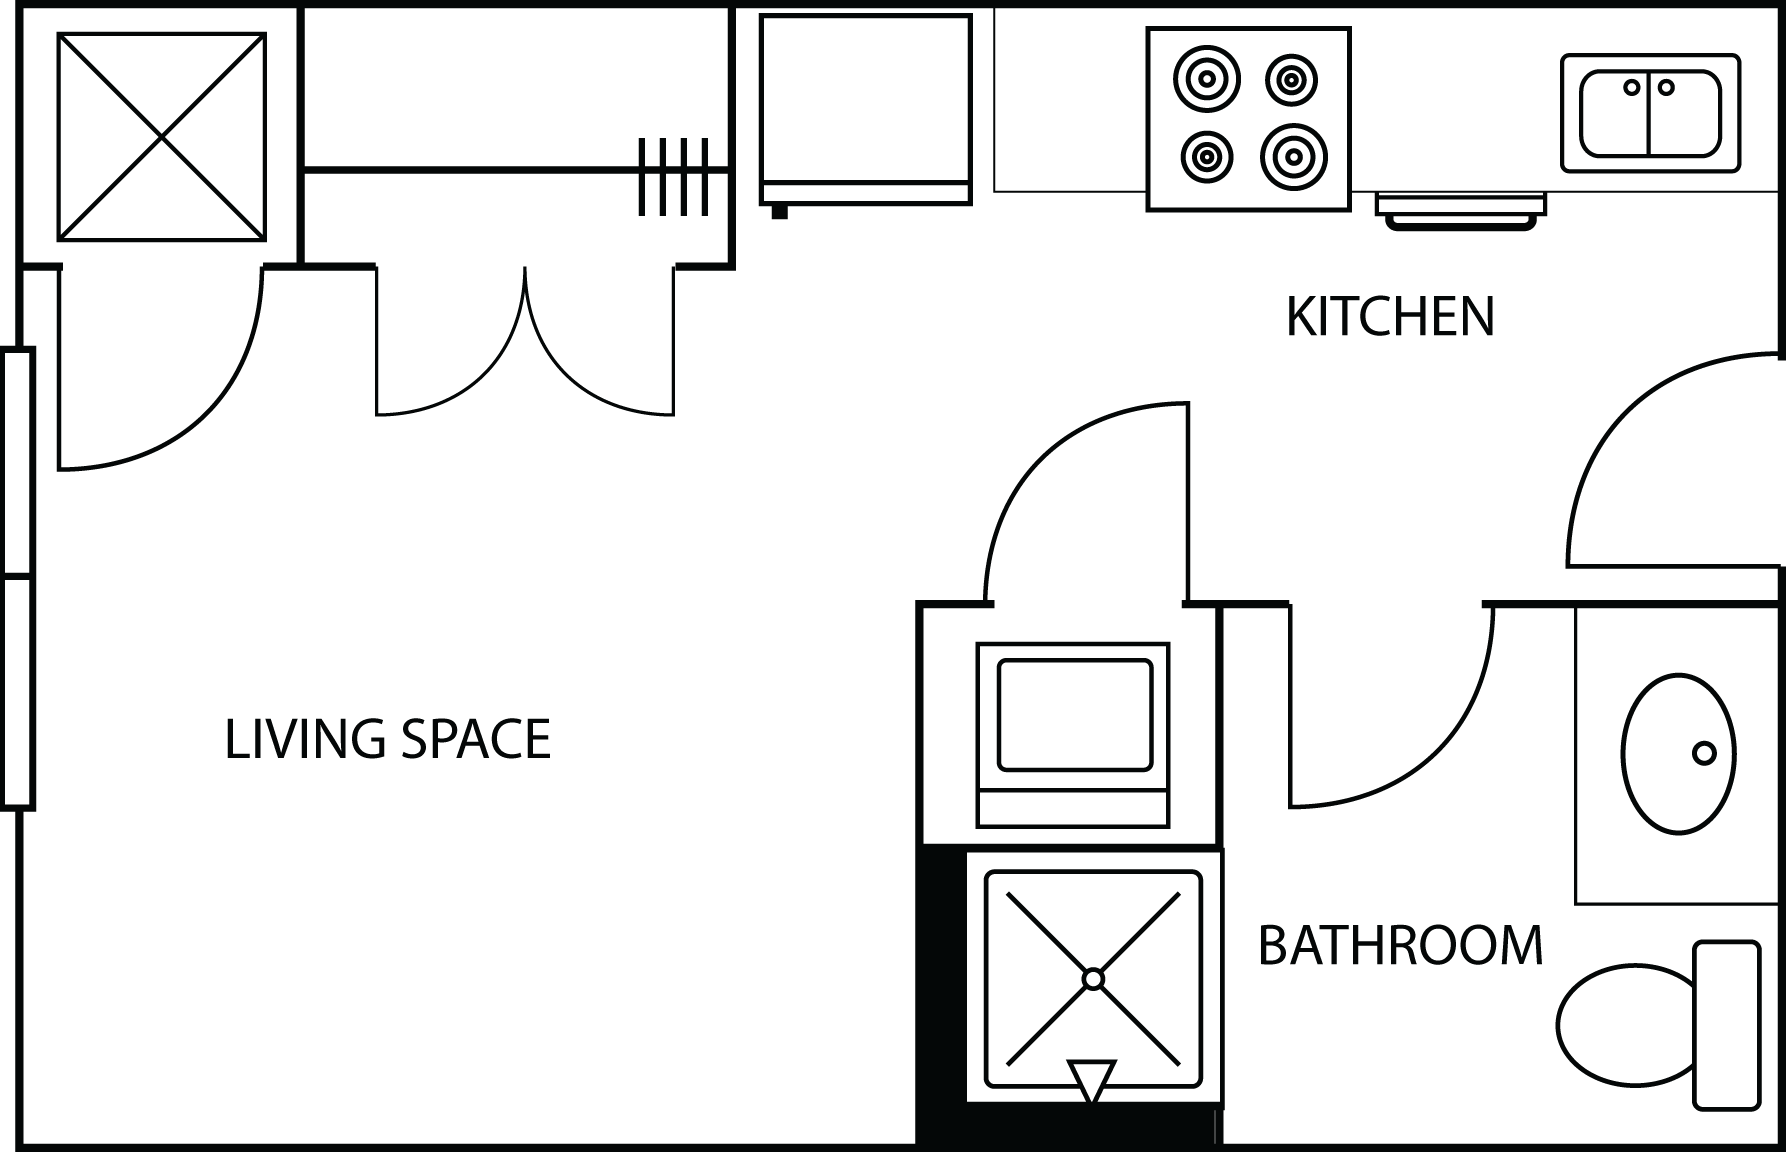 Illustration of Aspire's Atlantis Floor plan, a studio apartment for 1 Person